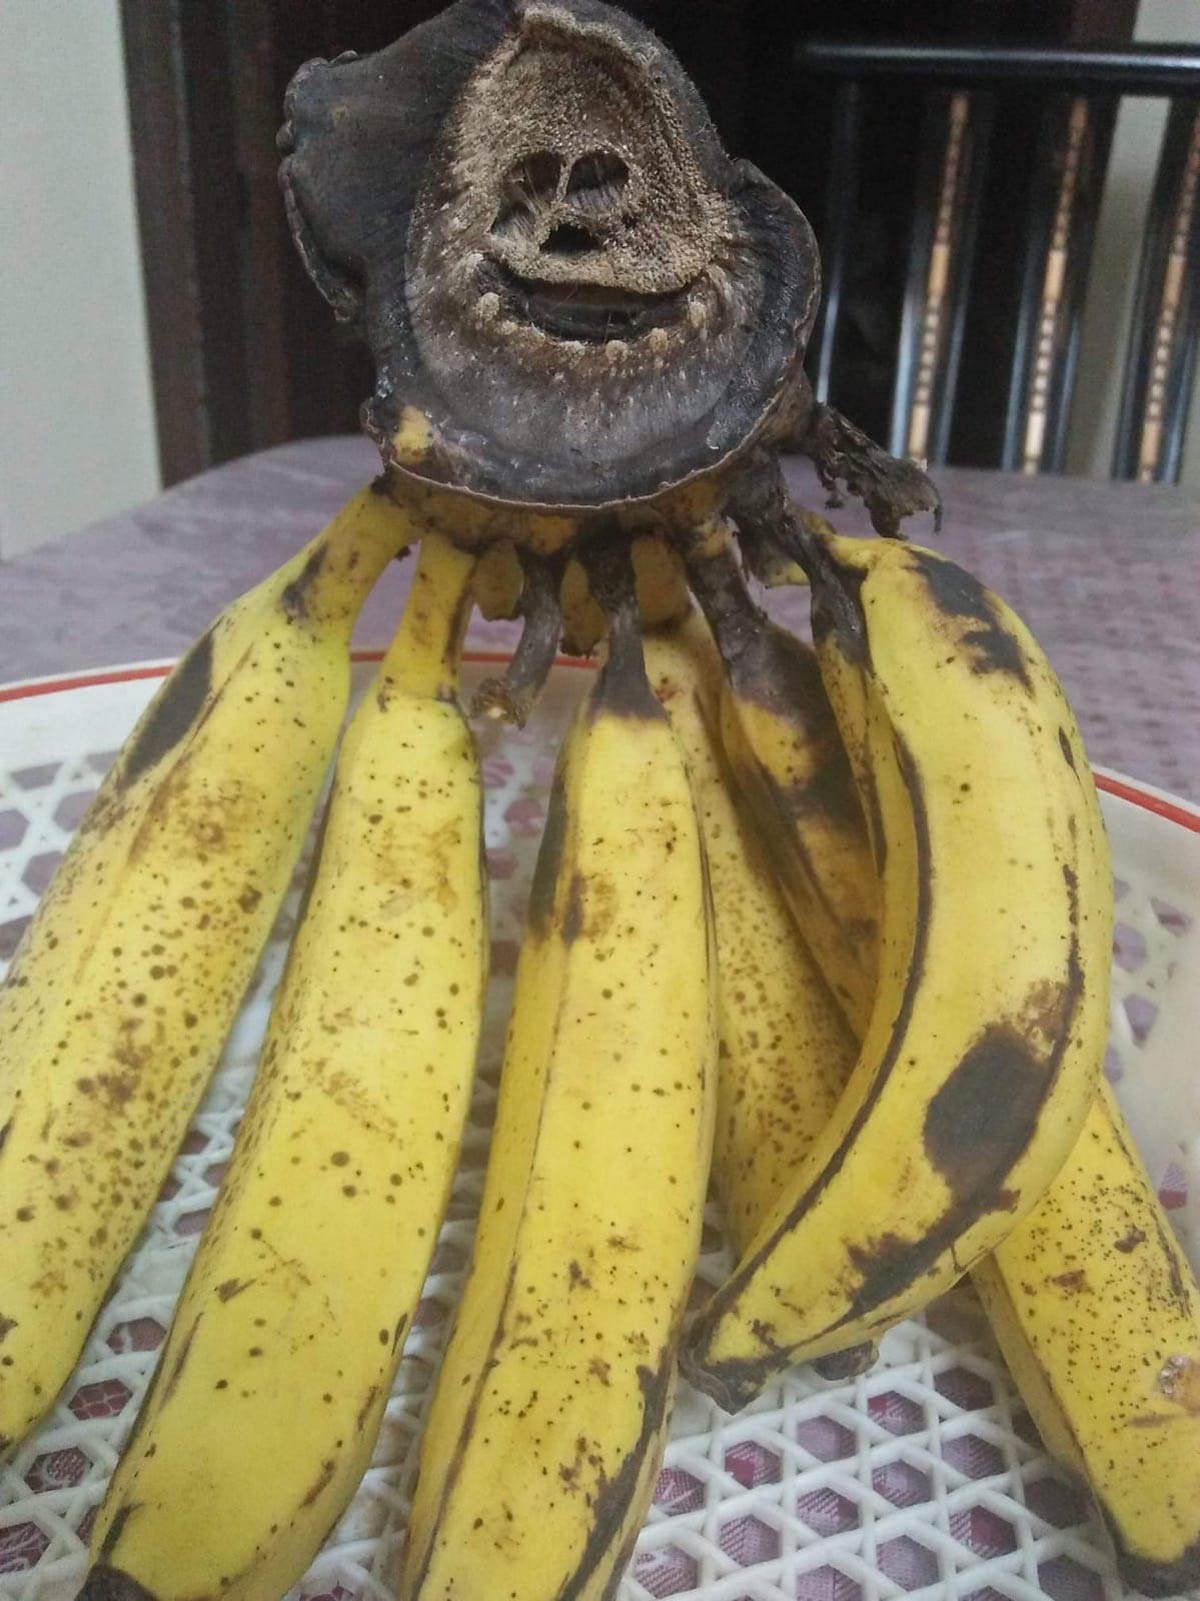 King Kong bananas